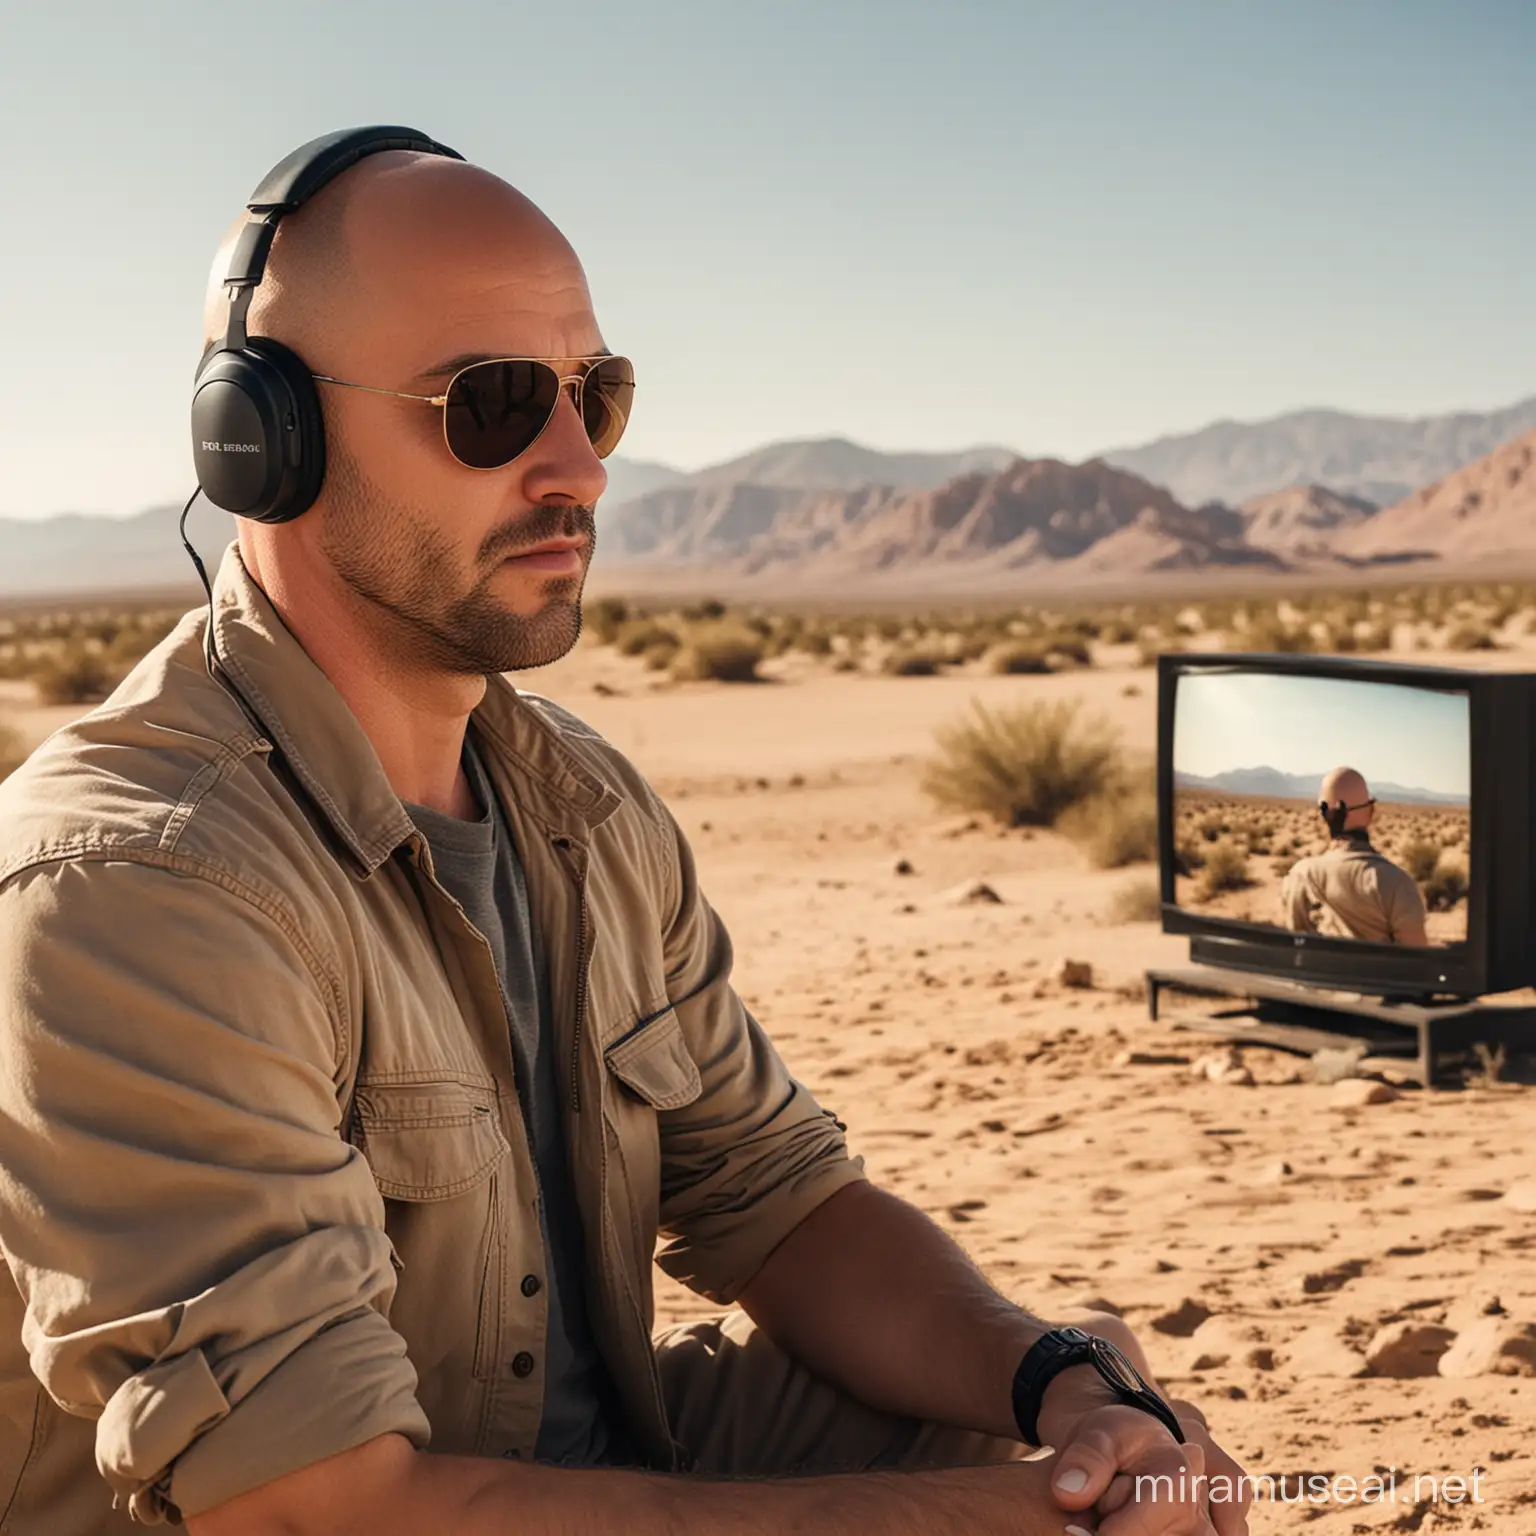 SunglassesClad Bald Man Enjoying TV in Desert Oasis